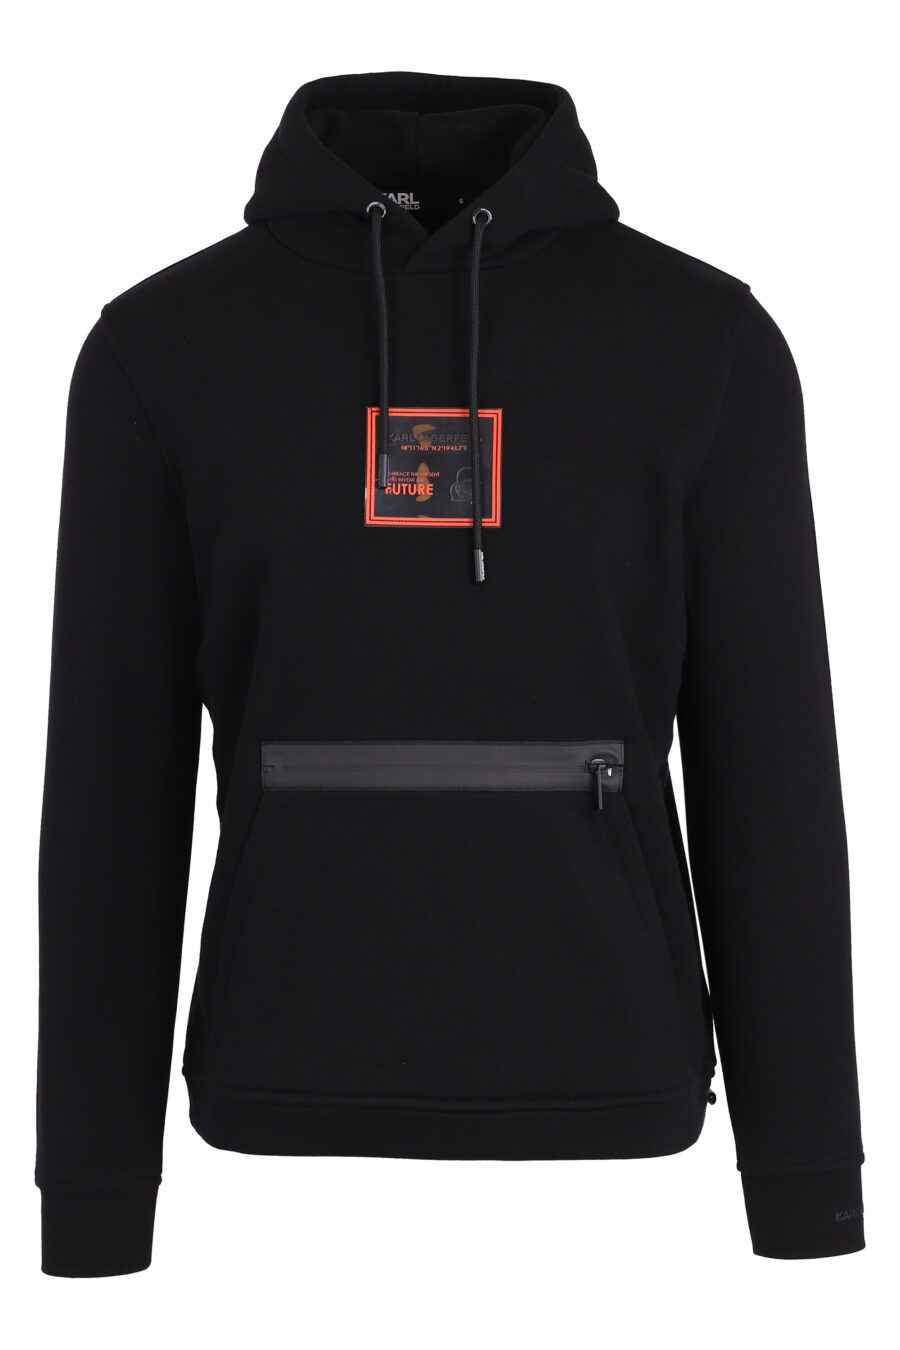 Black sweatshirt with hood and zip pocket with orange checkered logo - IMG 4730